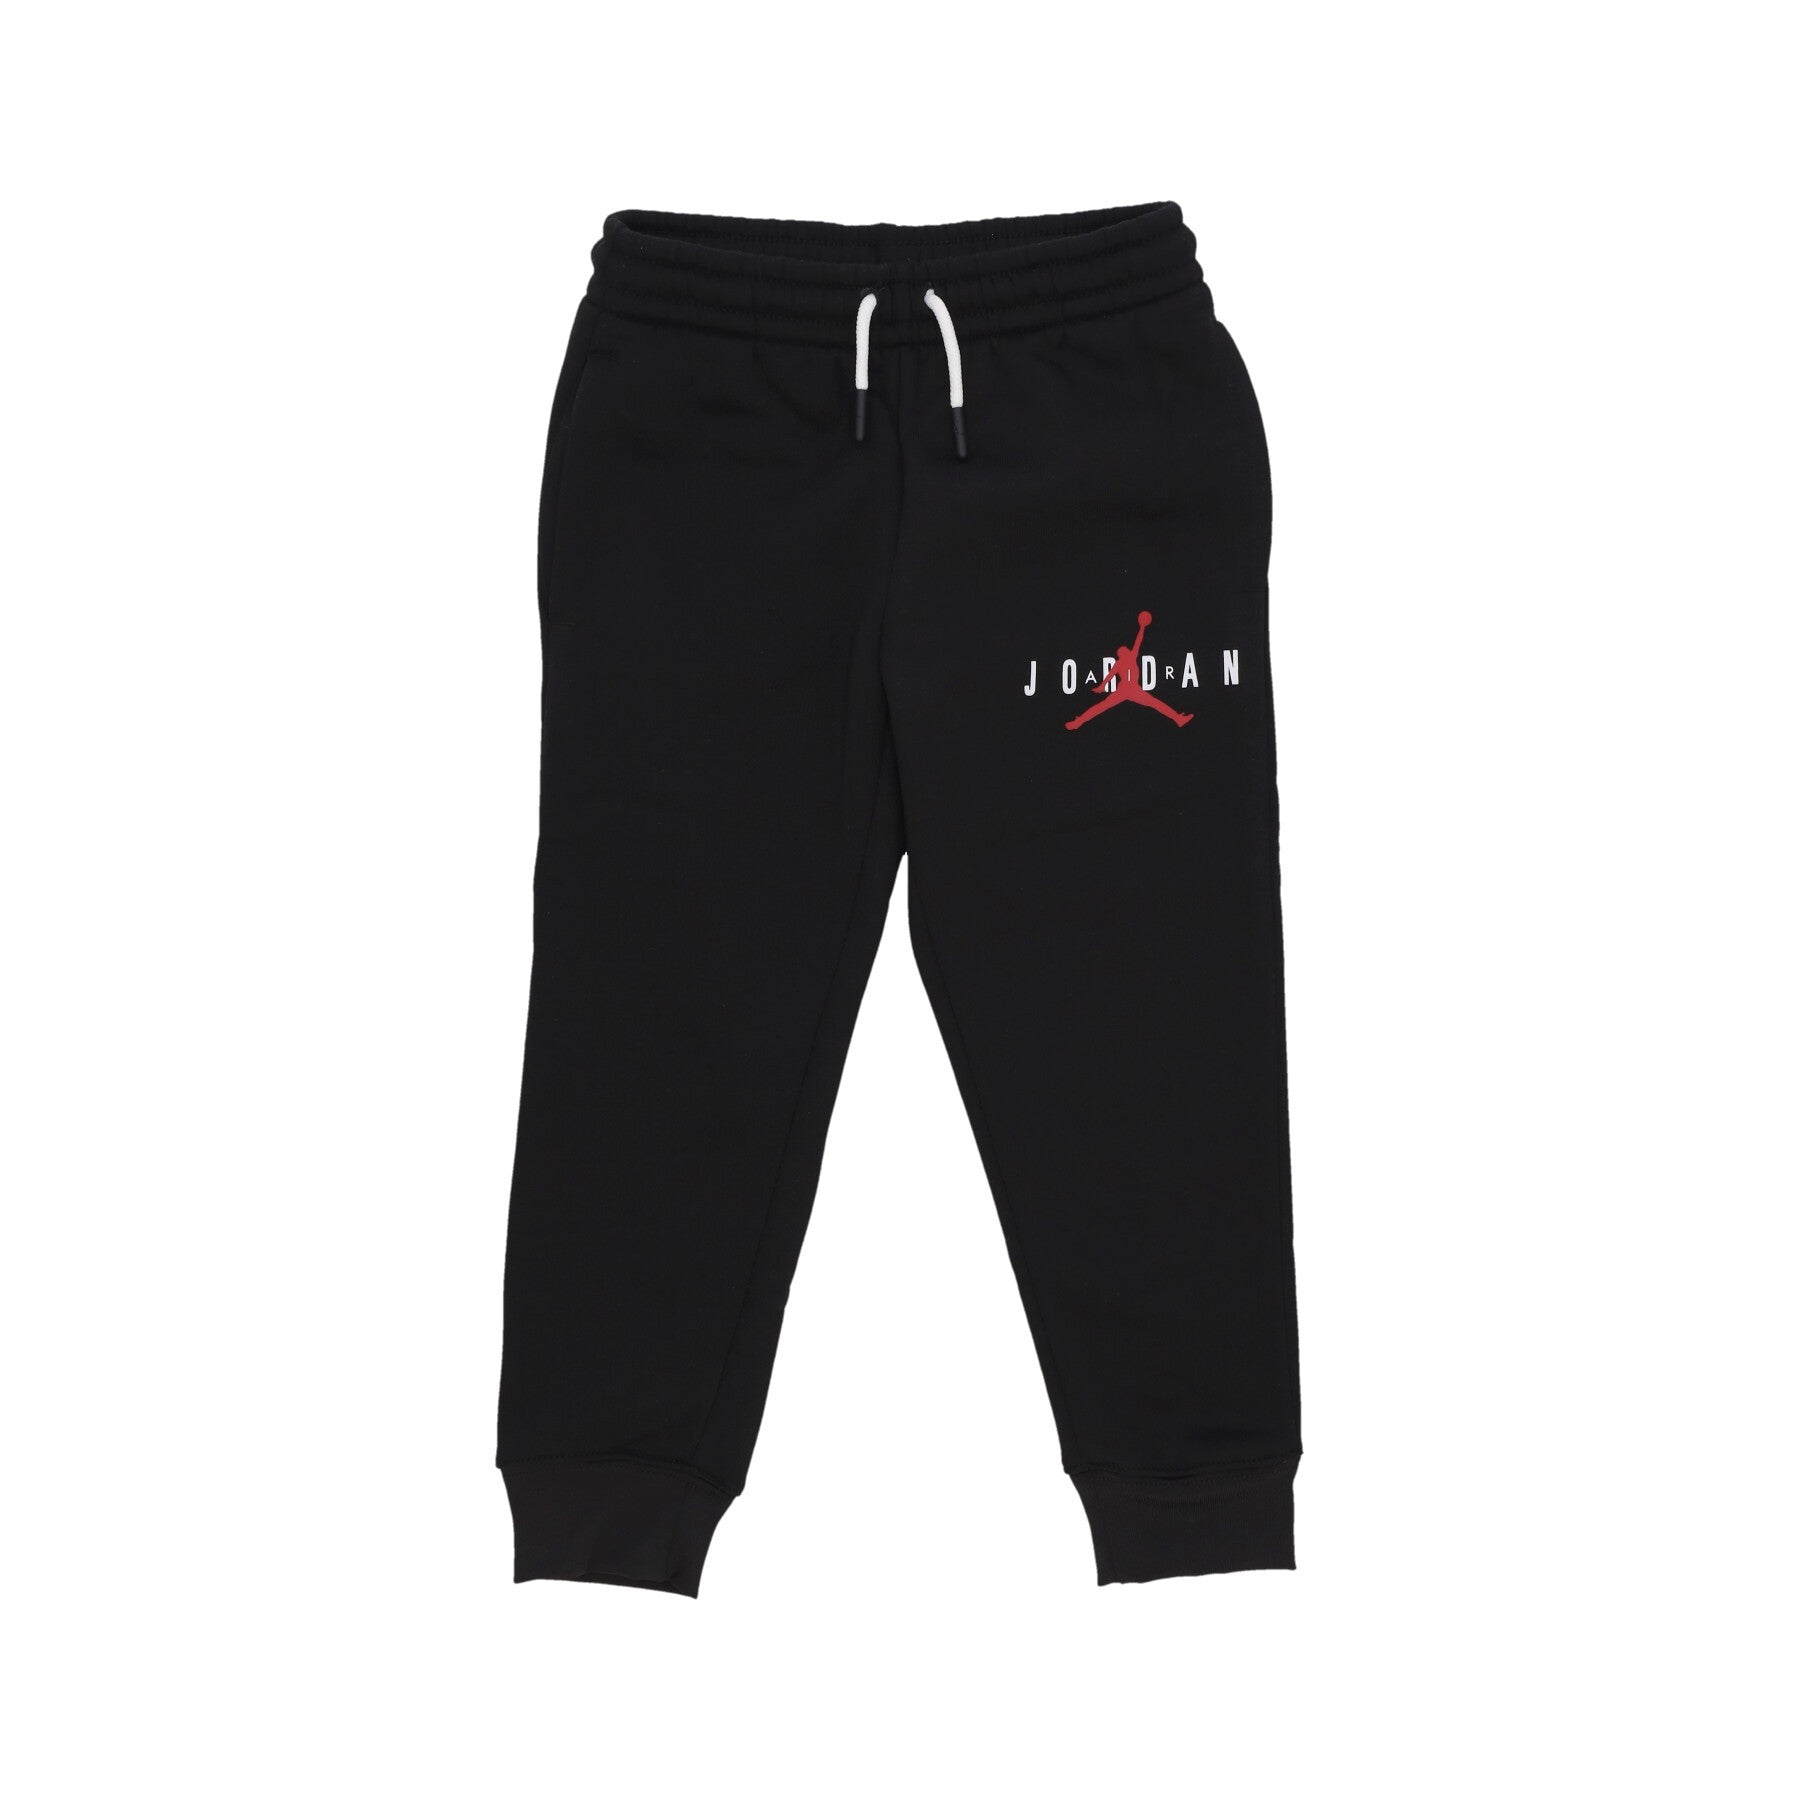 Jordan, Pantalone Tuta Felpato Bambino Jumpman Sustainable Pant, Black